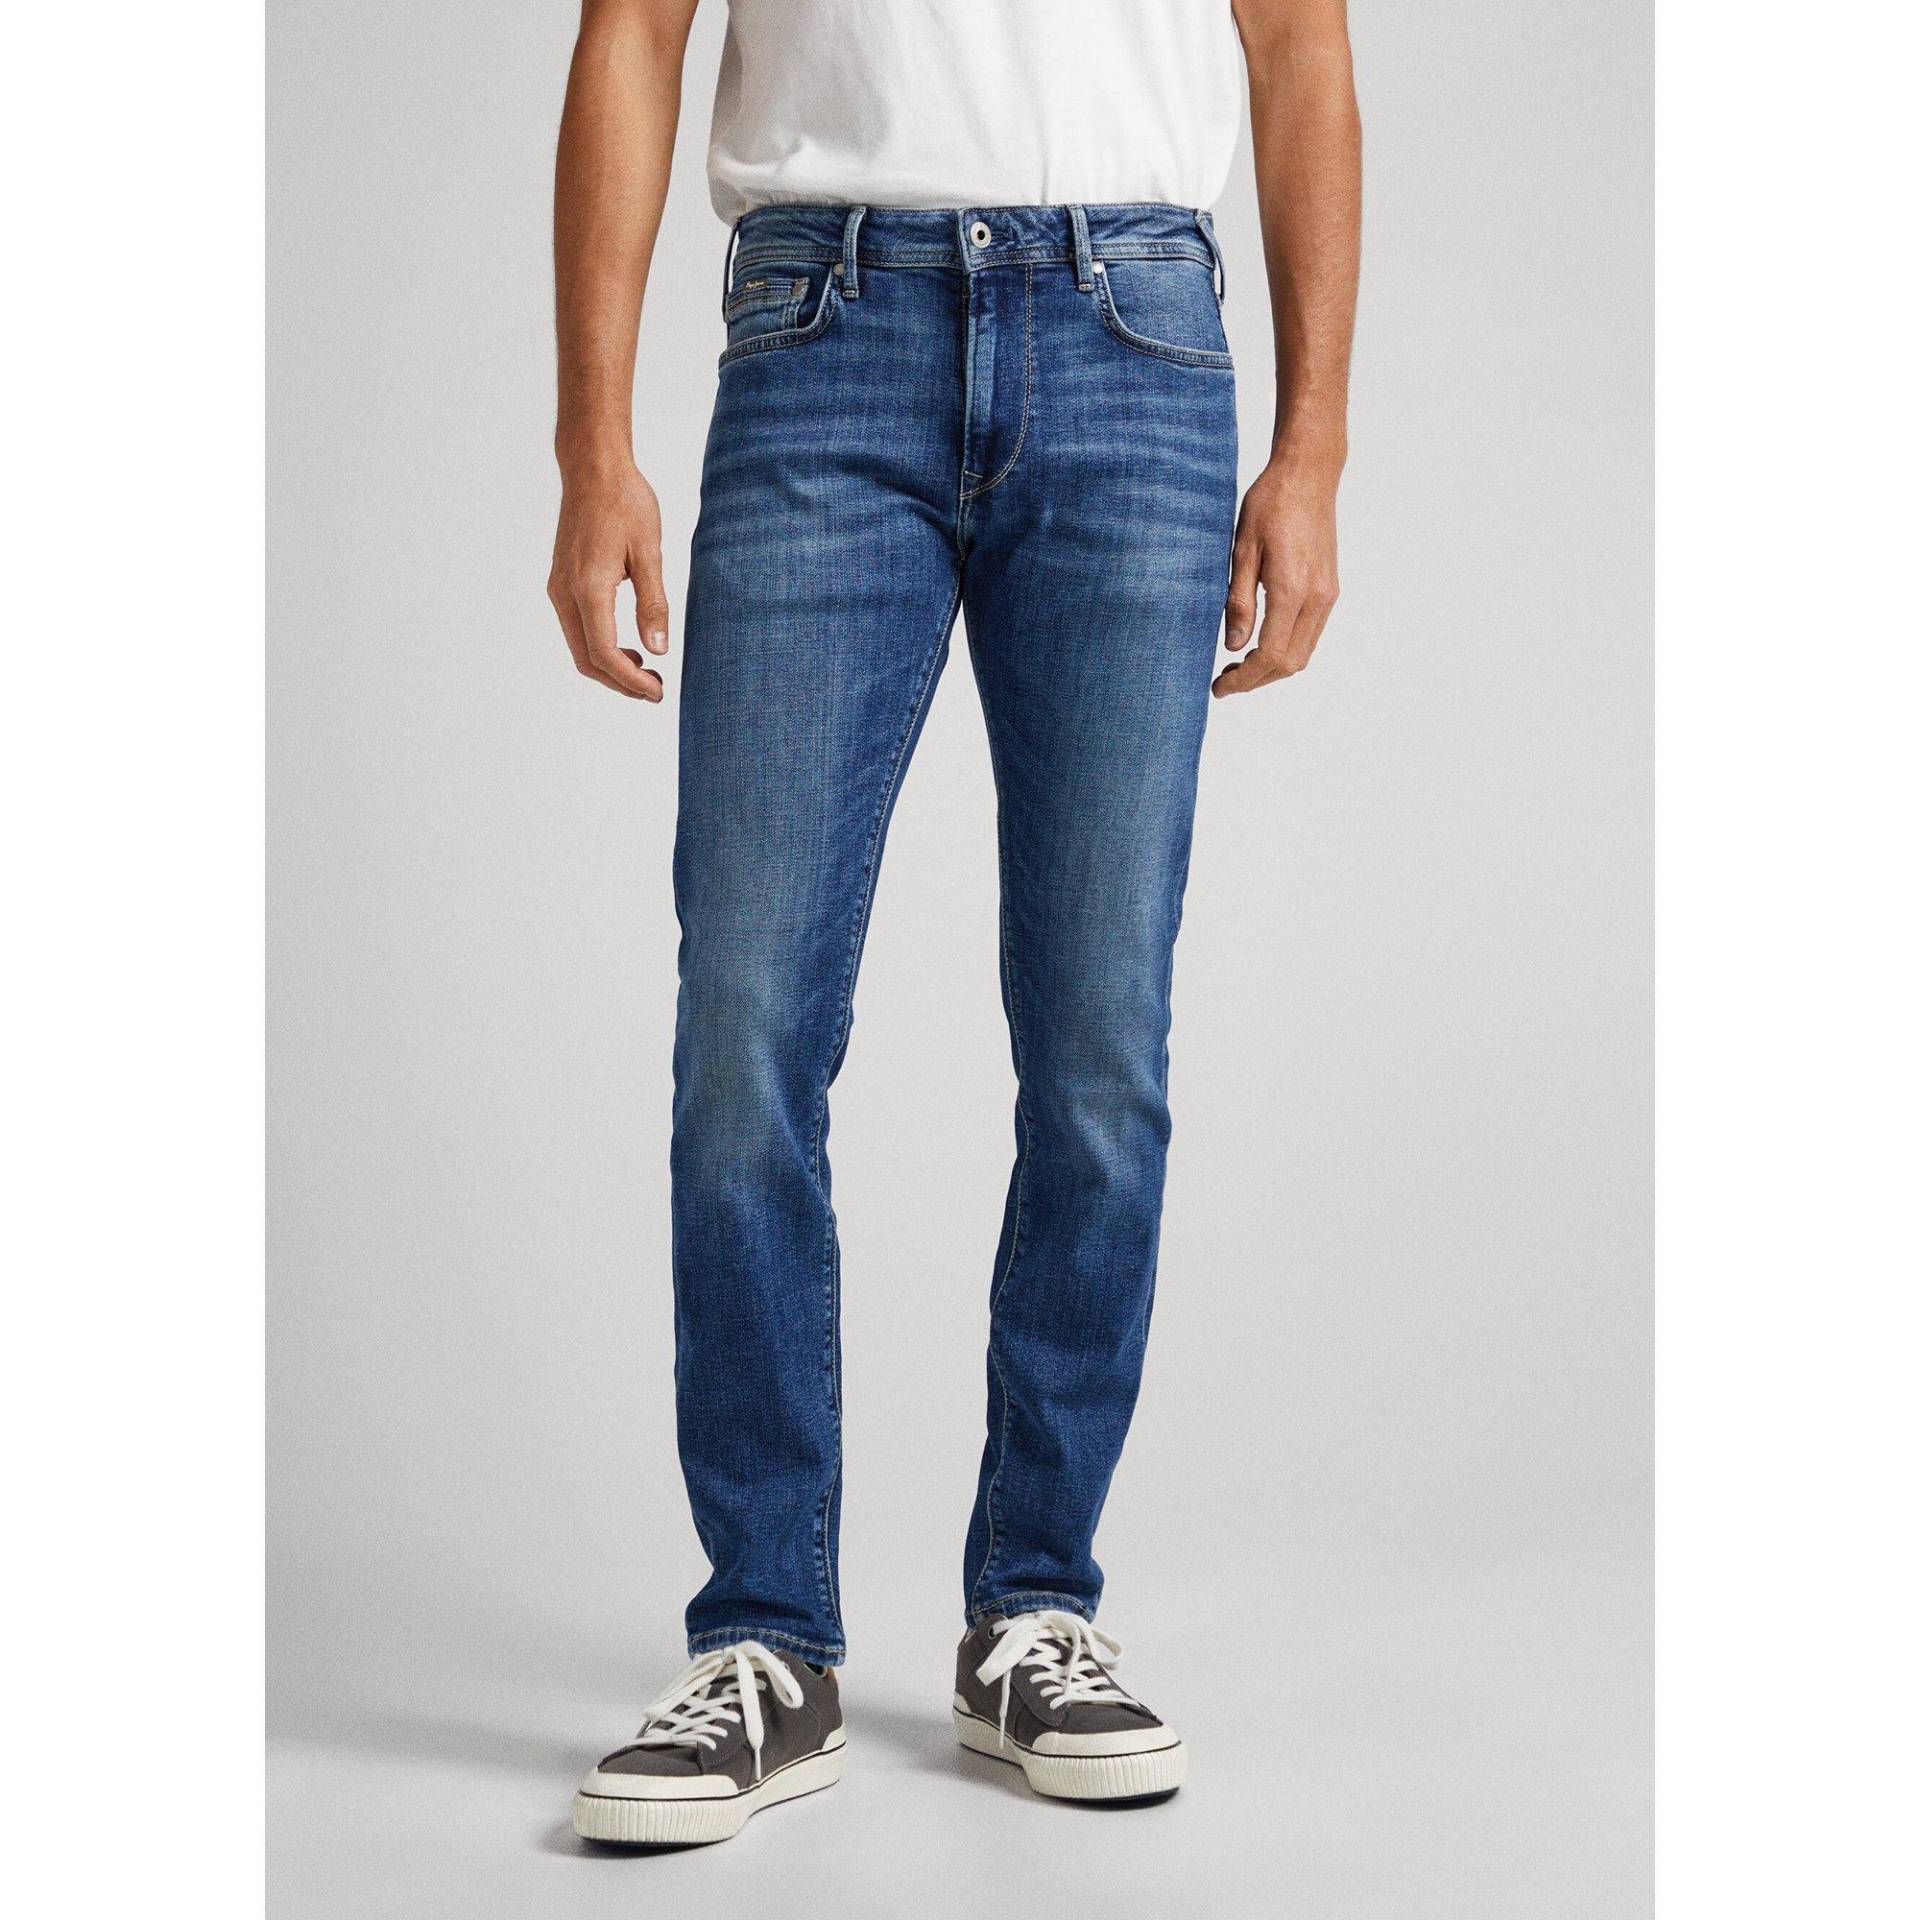 Jeans, Slim Fit Herren Blau  L32/W30 von Pepe Jeans